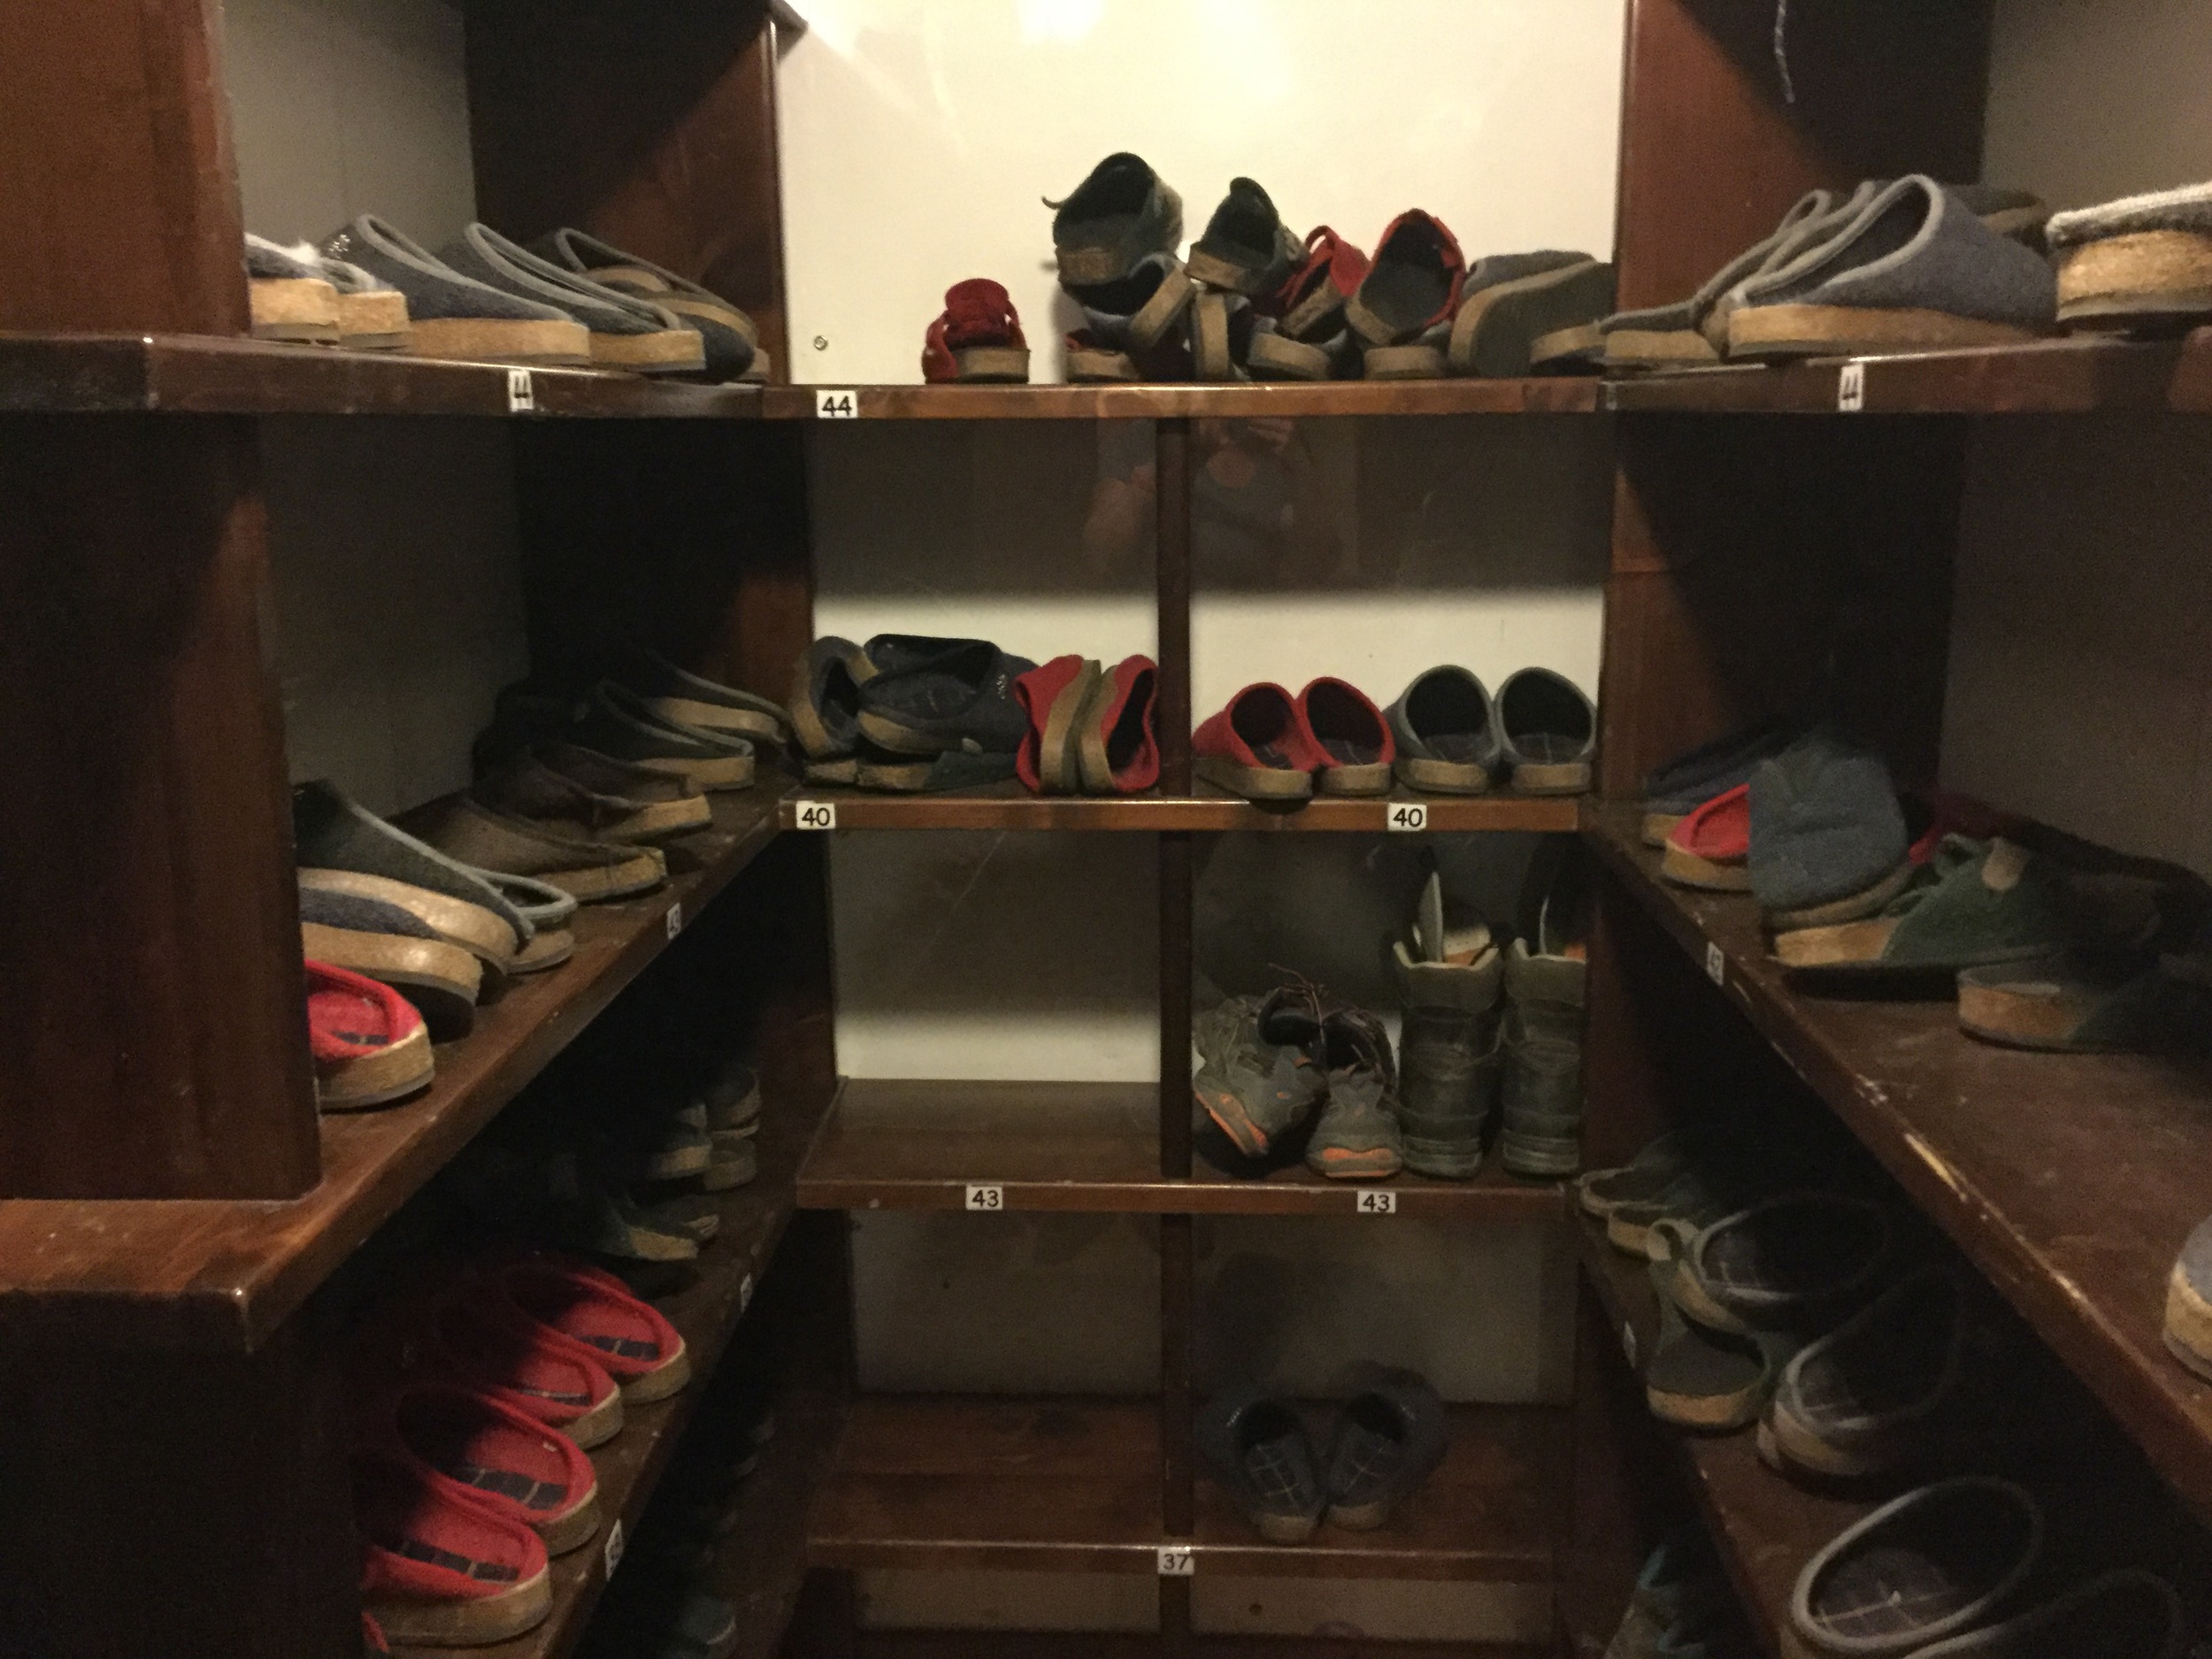 Boot Room